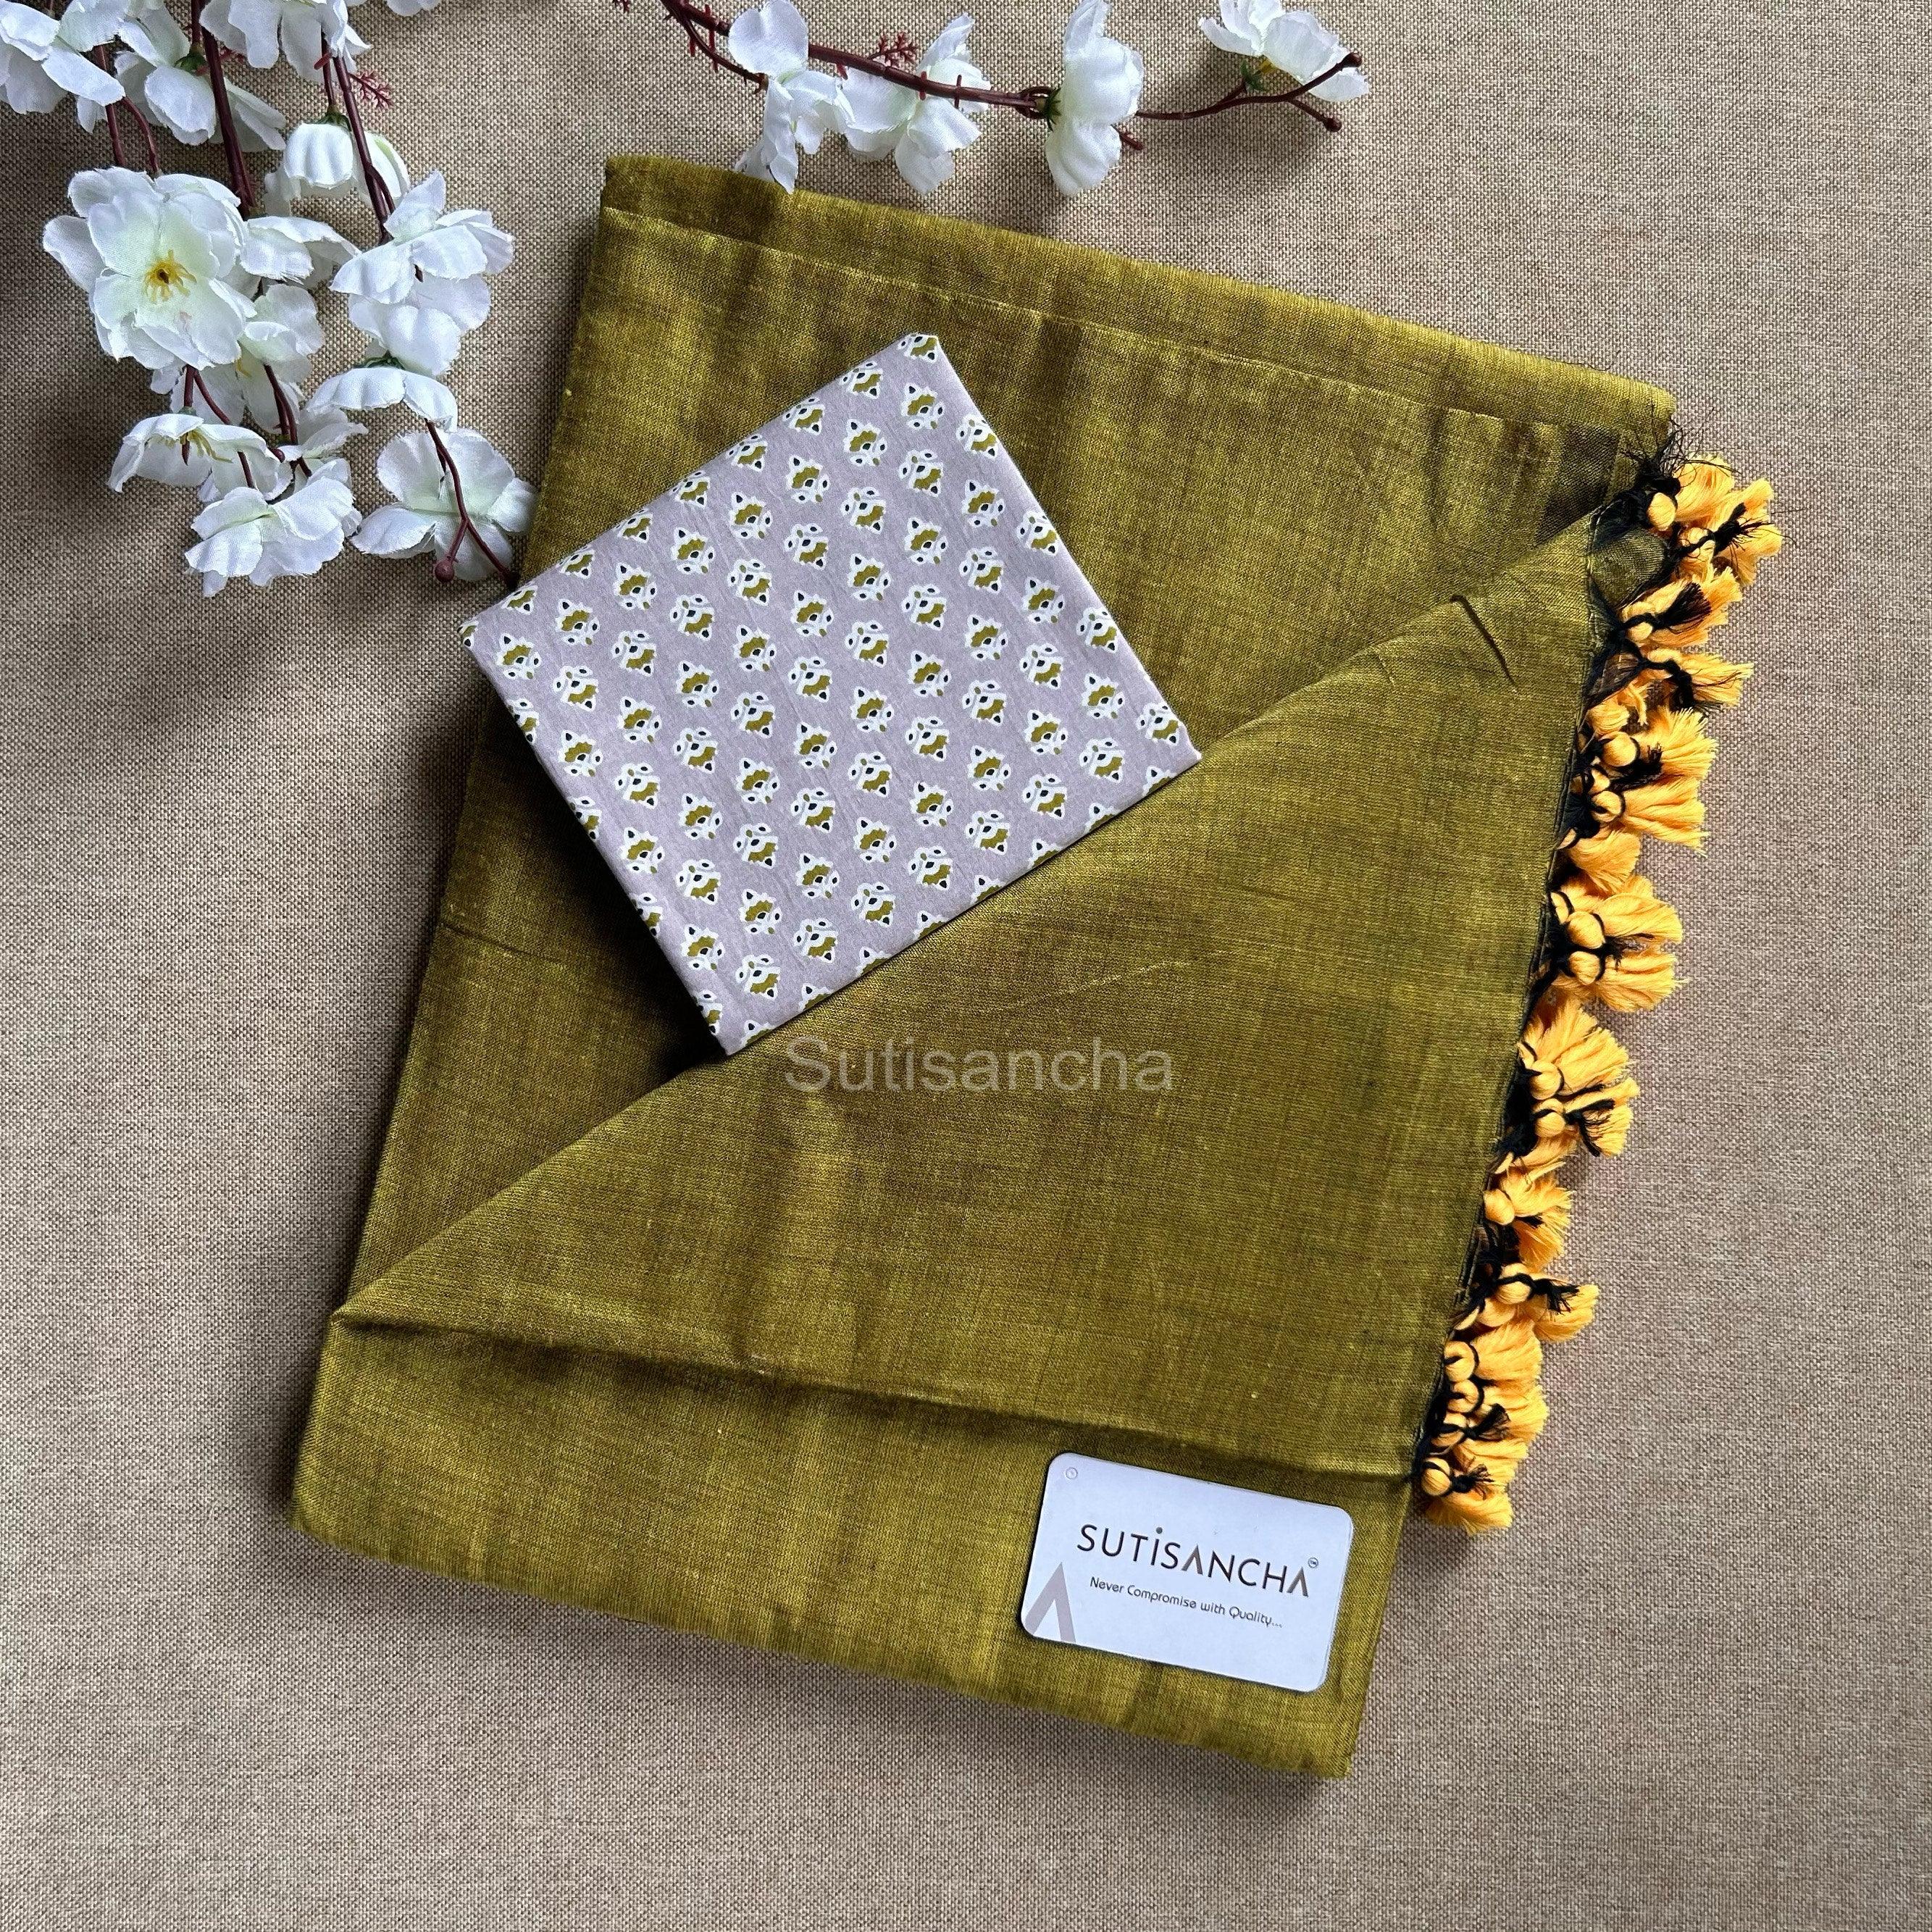 Sutisancha Olive Colour Handloom Cotton saree - Suti Sancha